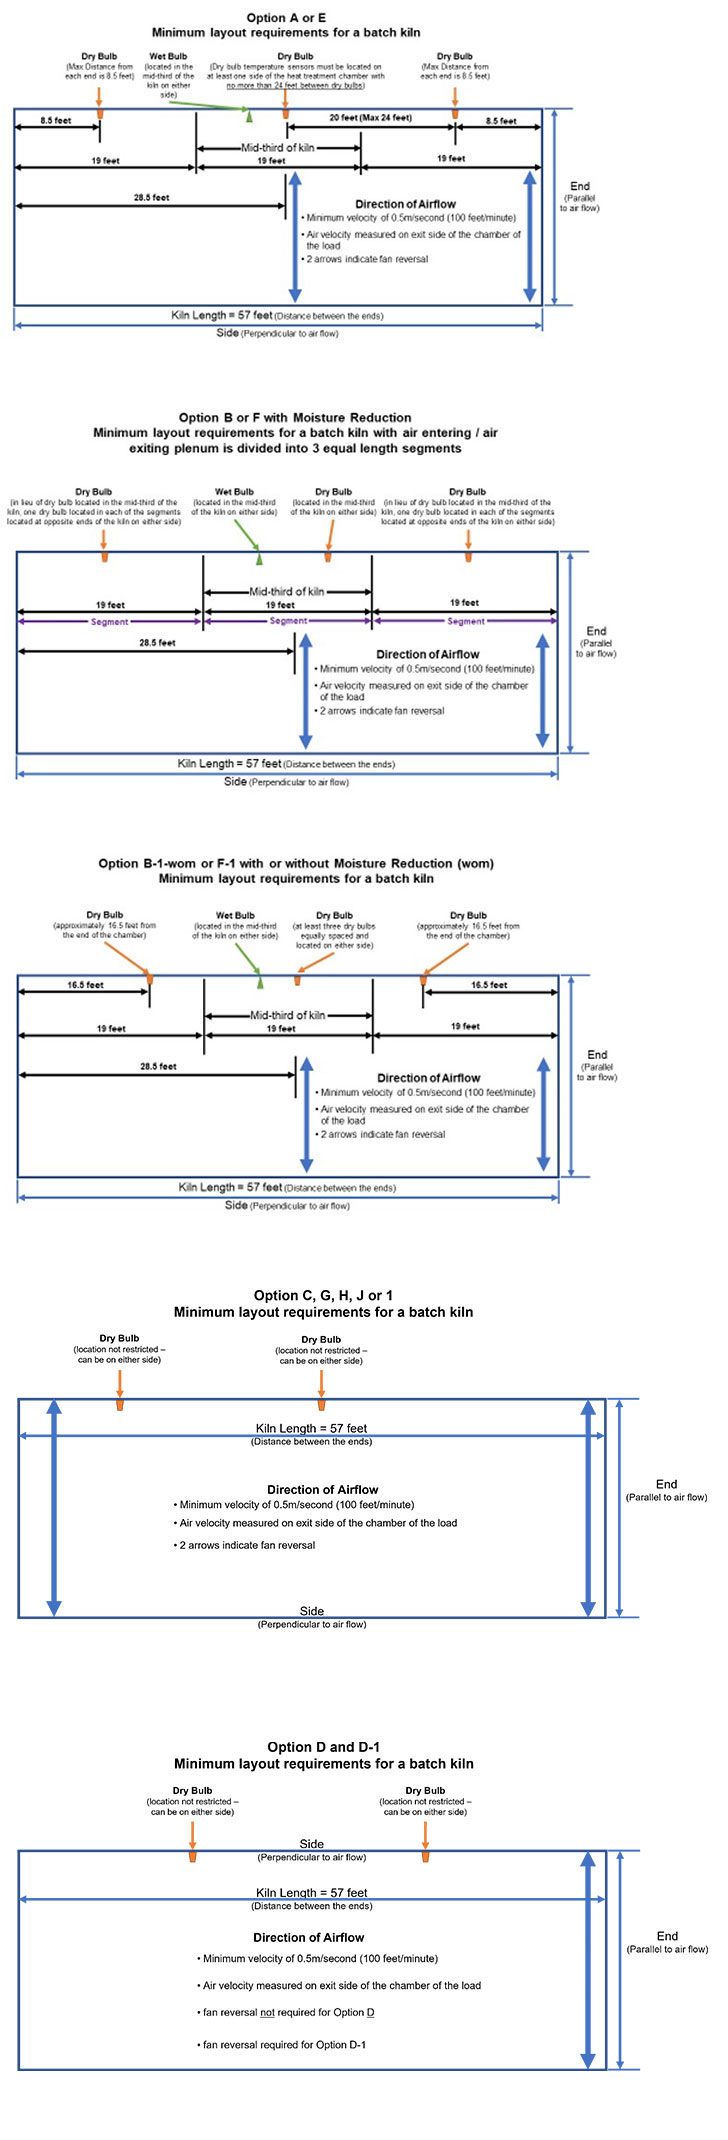 Appendix B: batch kiln layout diagrams. Description follows.